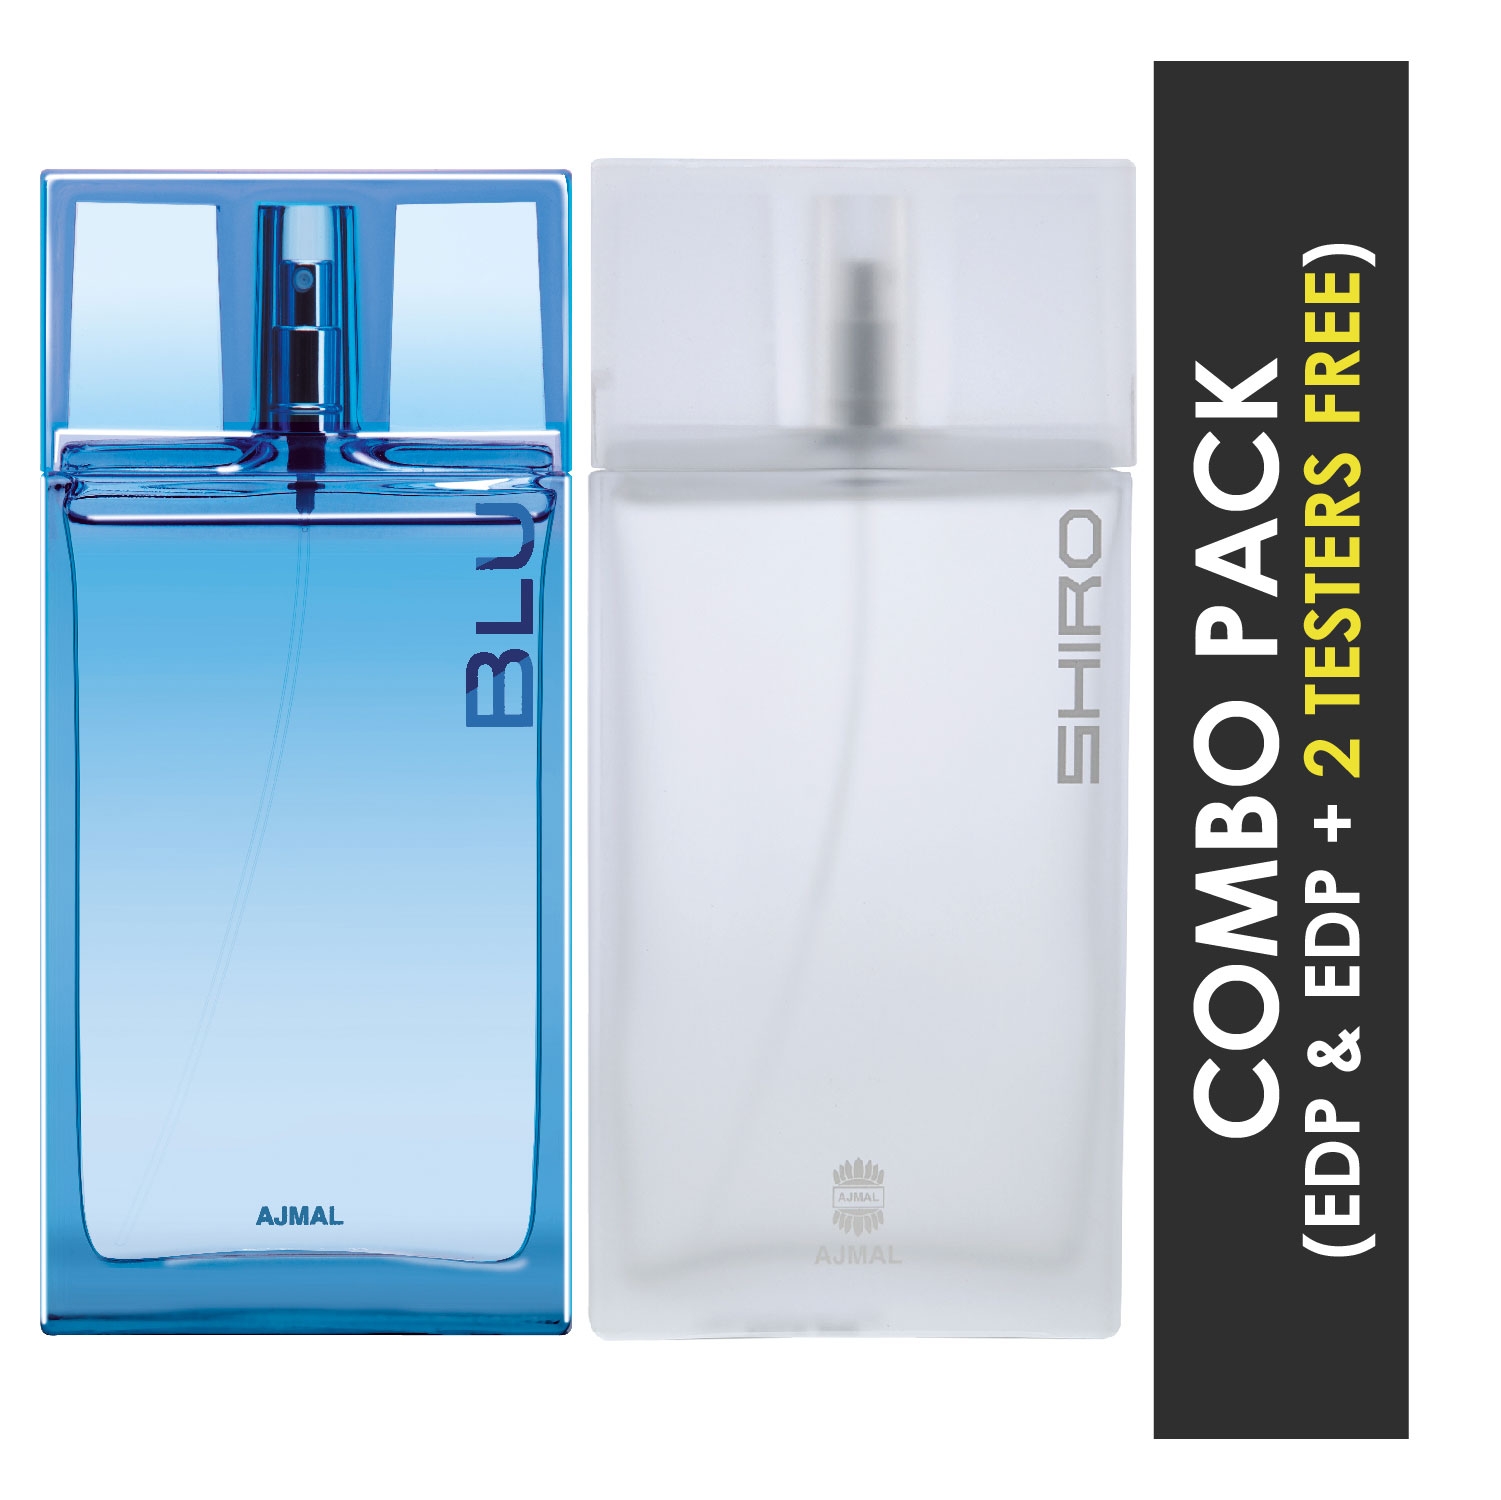 Ajmal | Ajmal Blu EDP Aquatic Woody Perfume 90ml for Men and Shiro EDP Citrus Spicy Perfume 90ml for Men + 2 Parfum Testers FREE